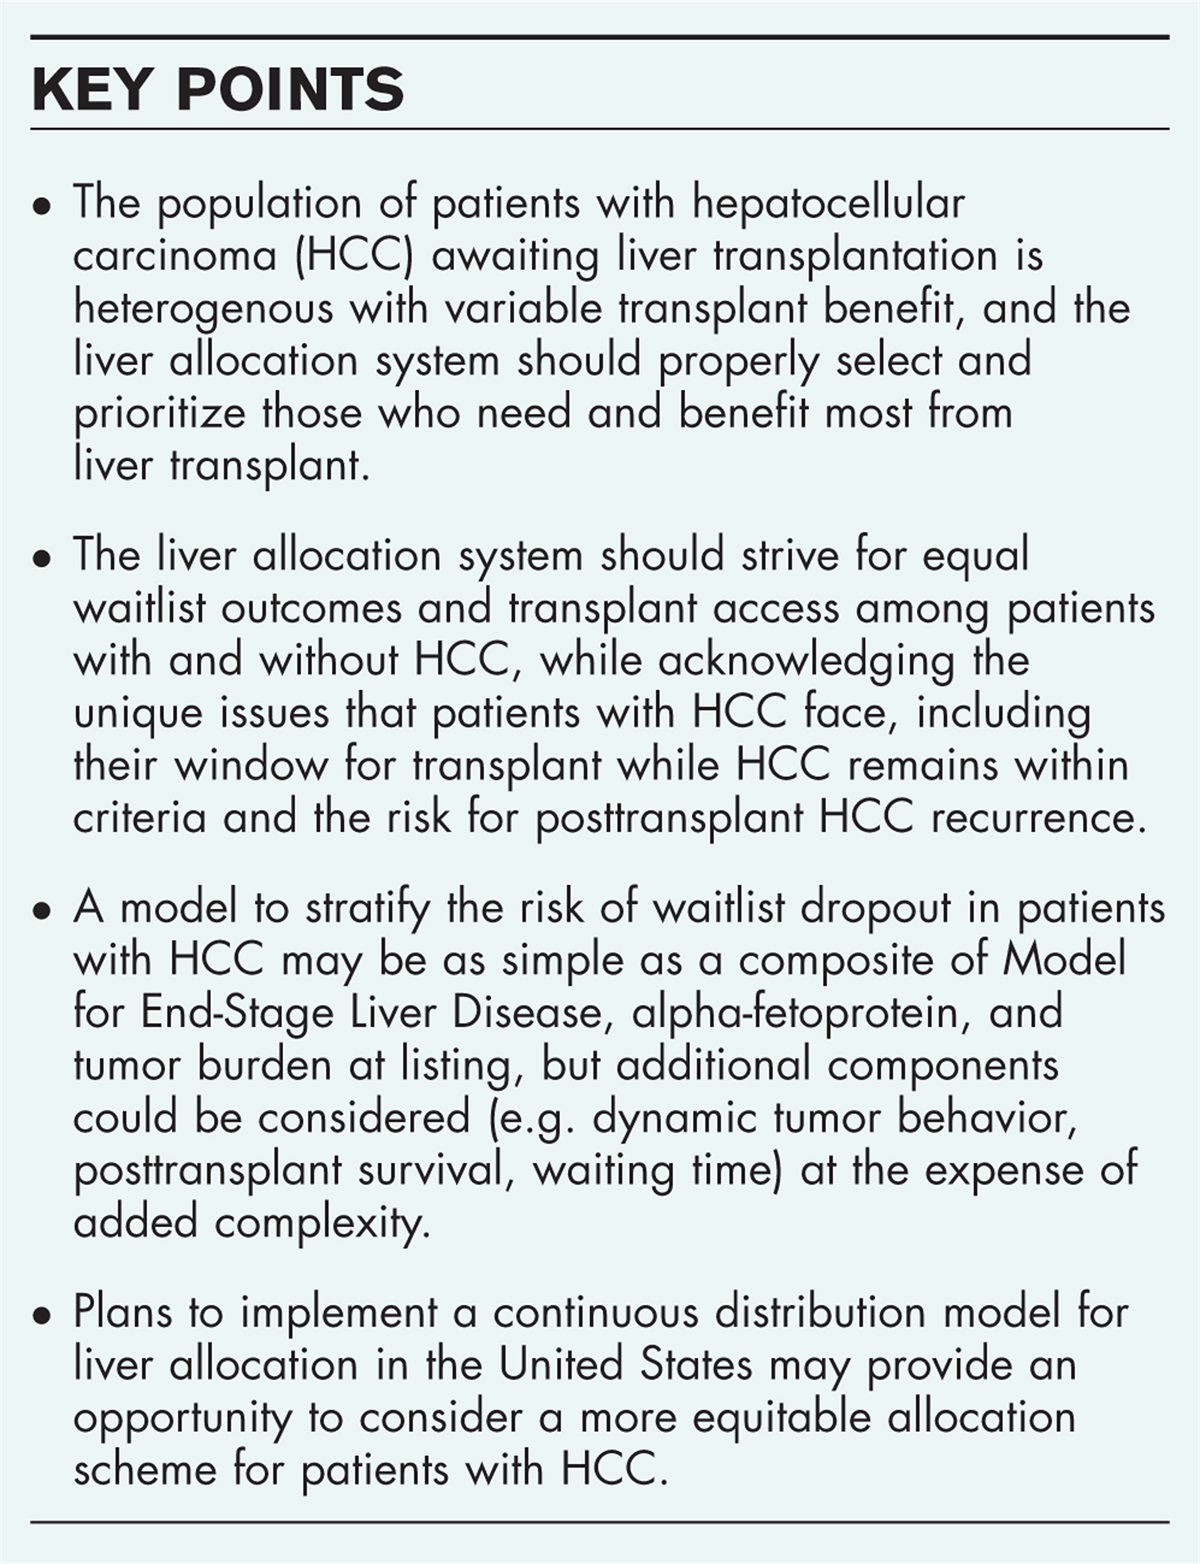 Optimizing liver transplant prioritization for hepatocellular carcinoma through risk stratification